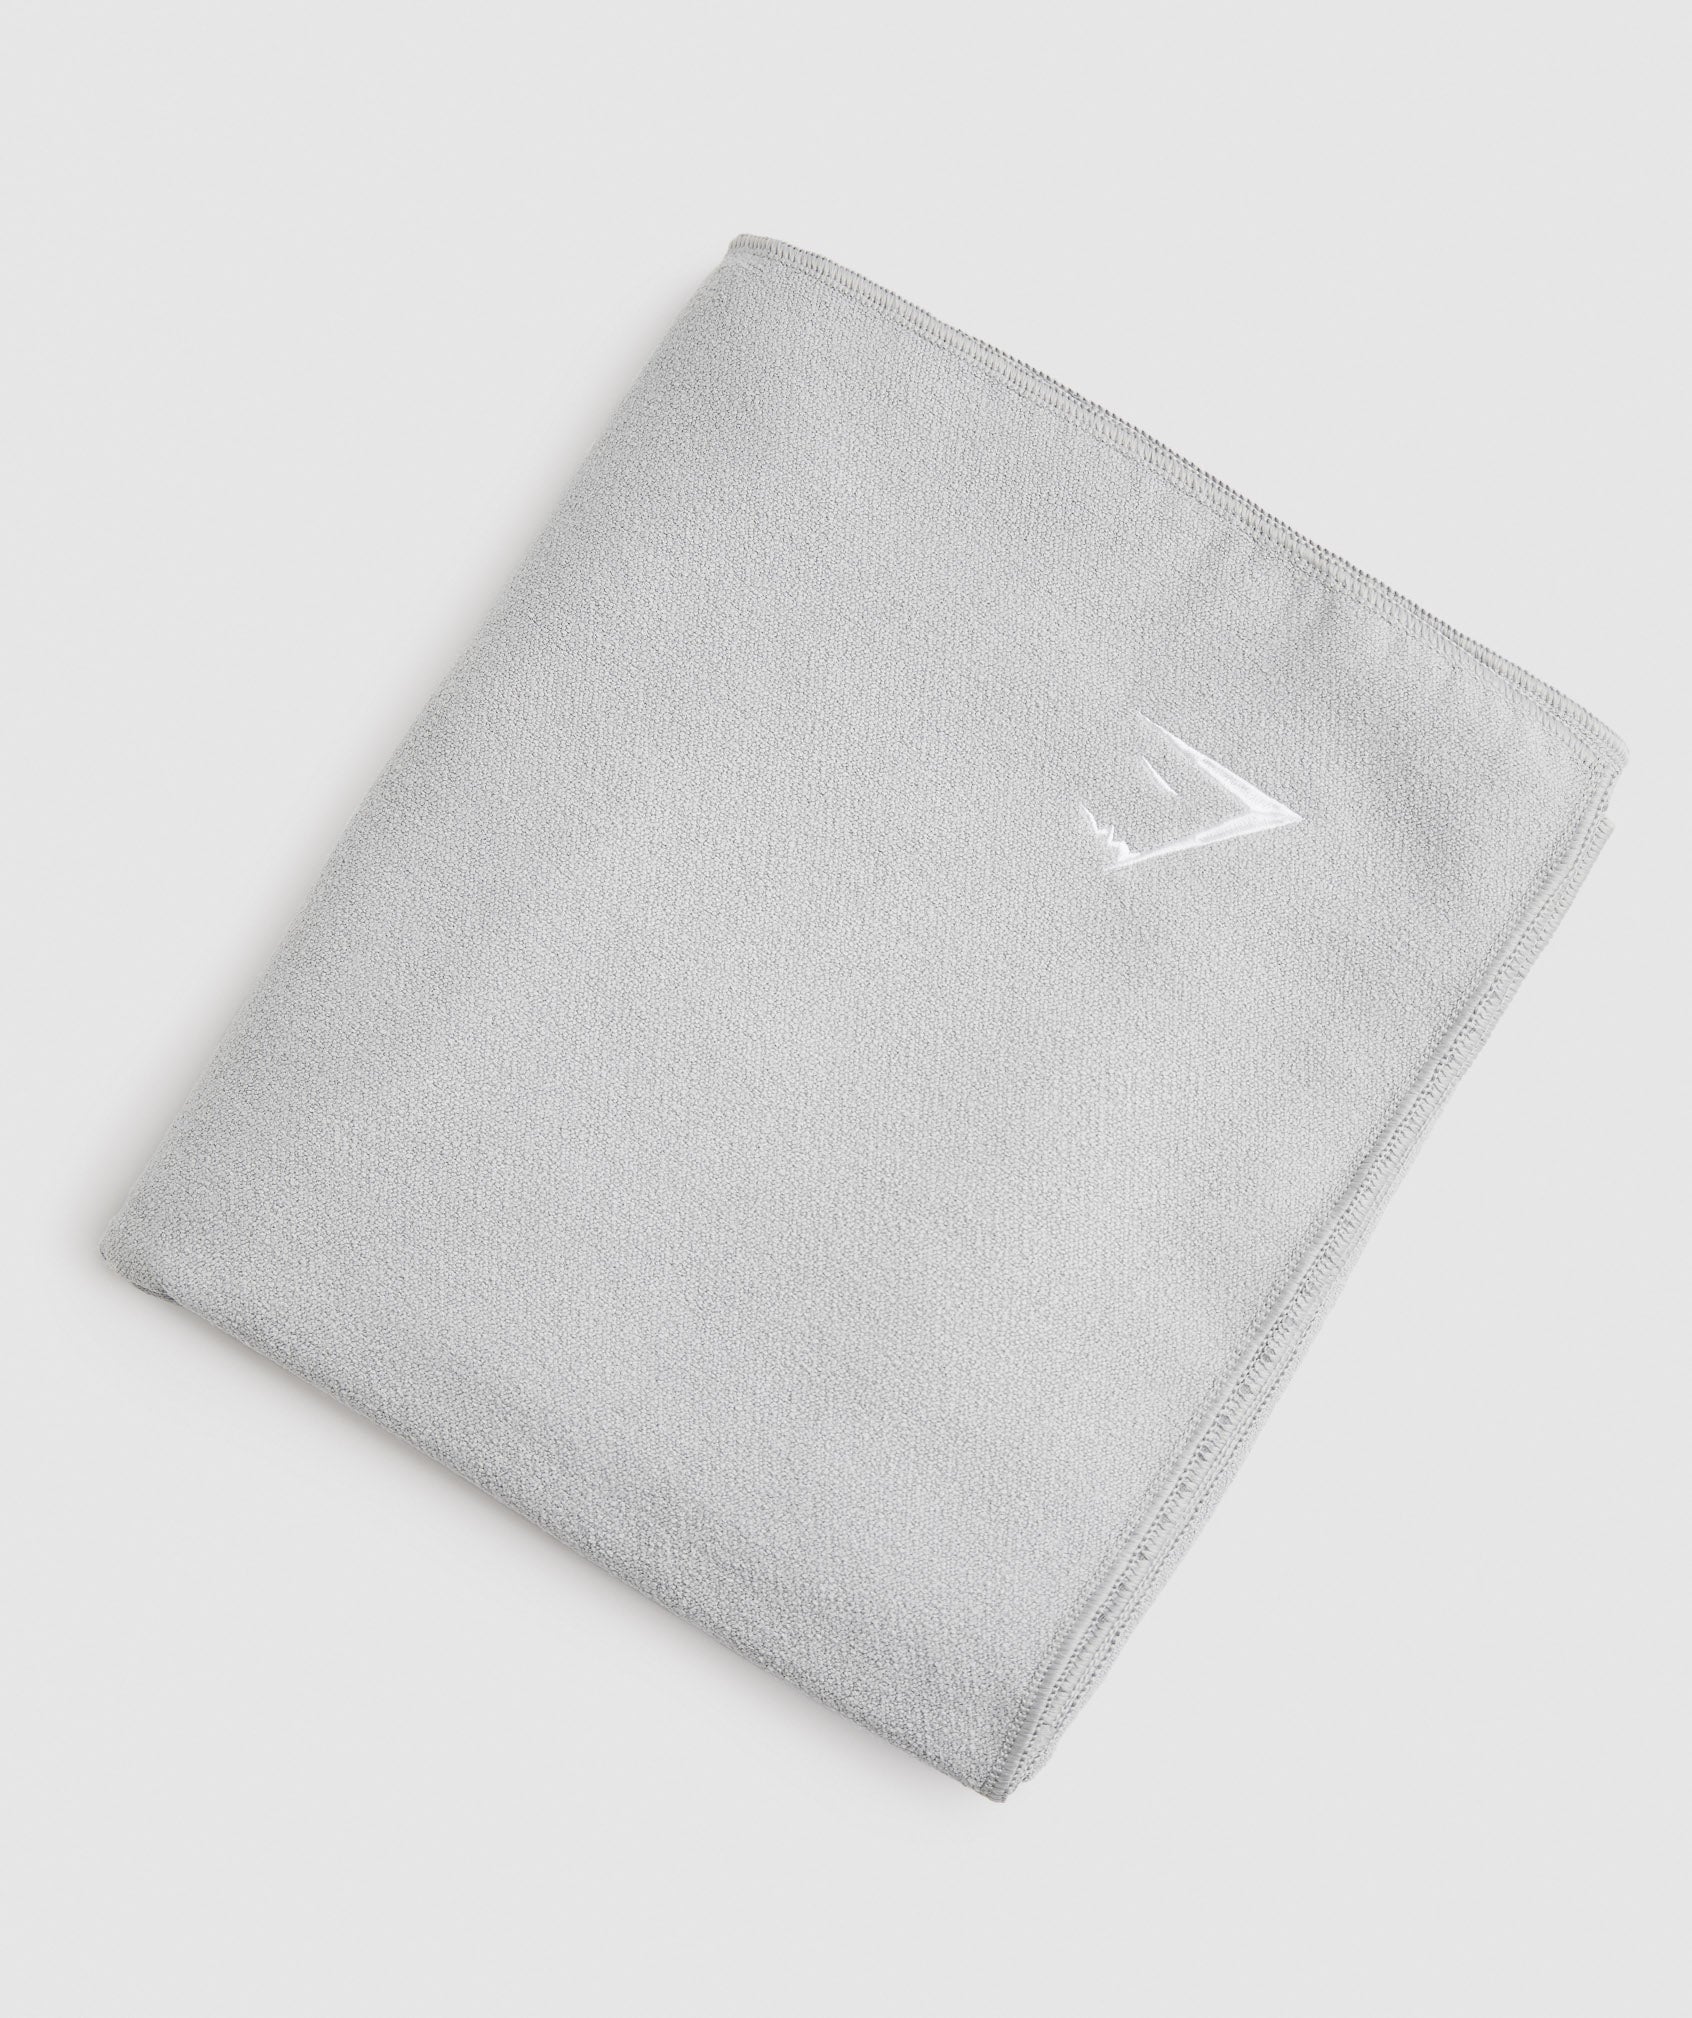 Studio Mat Towel in Light Grey